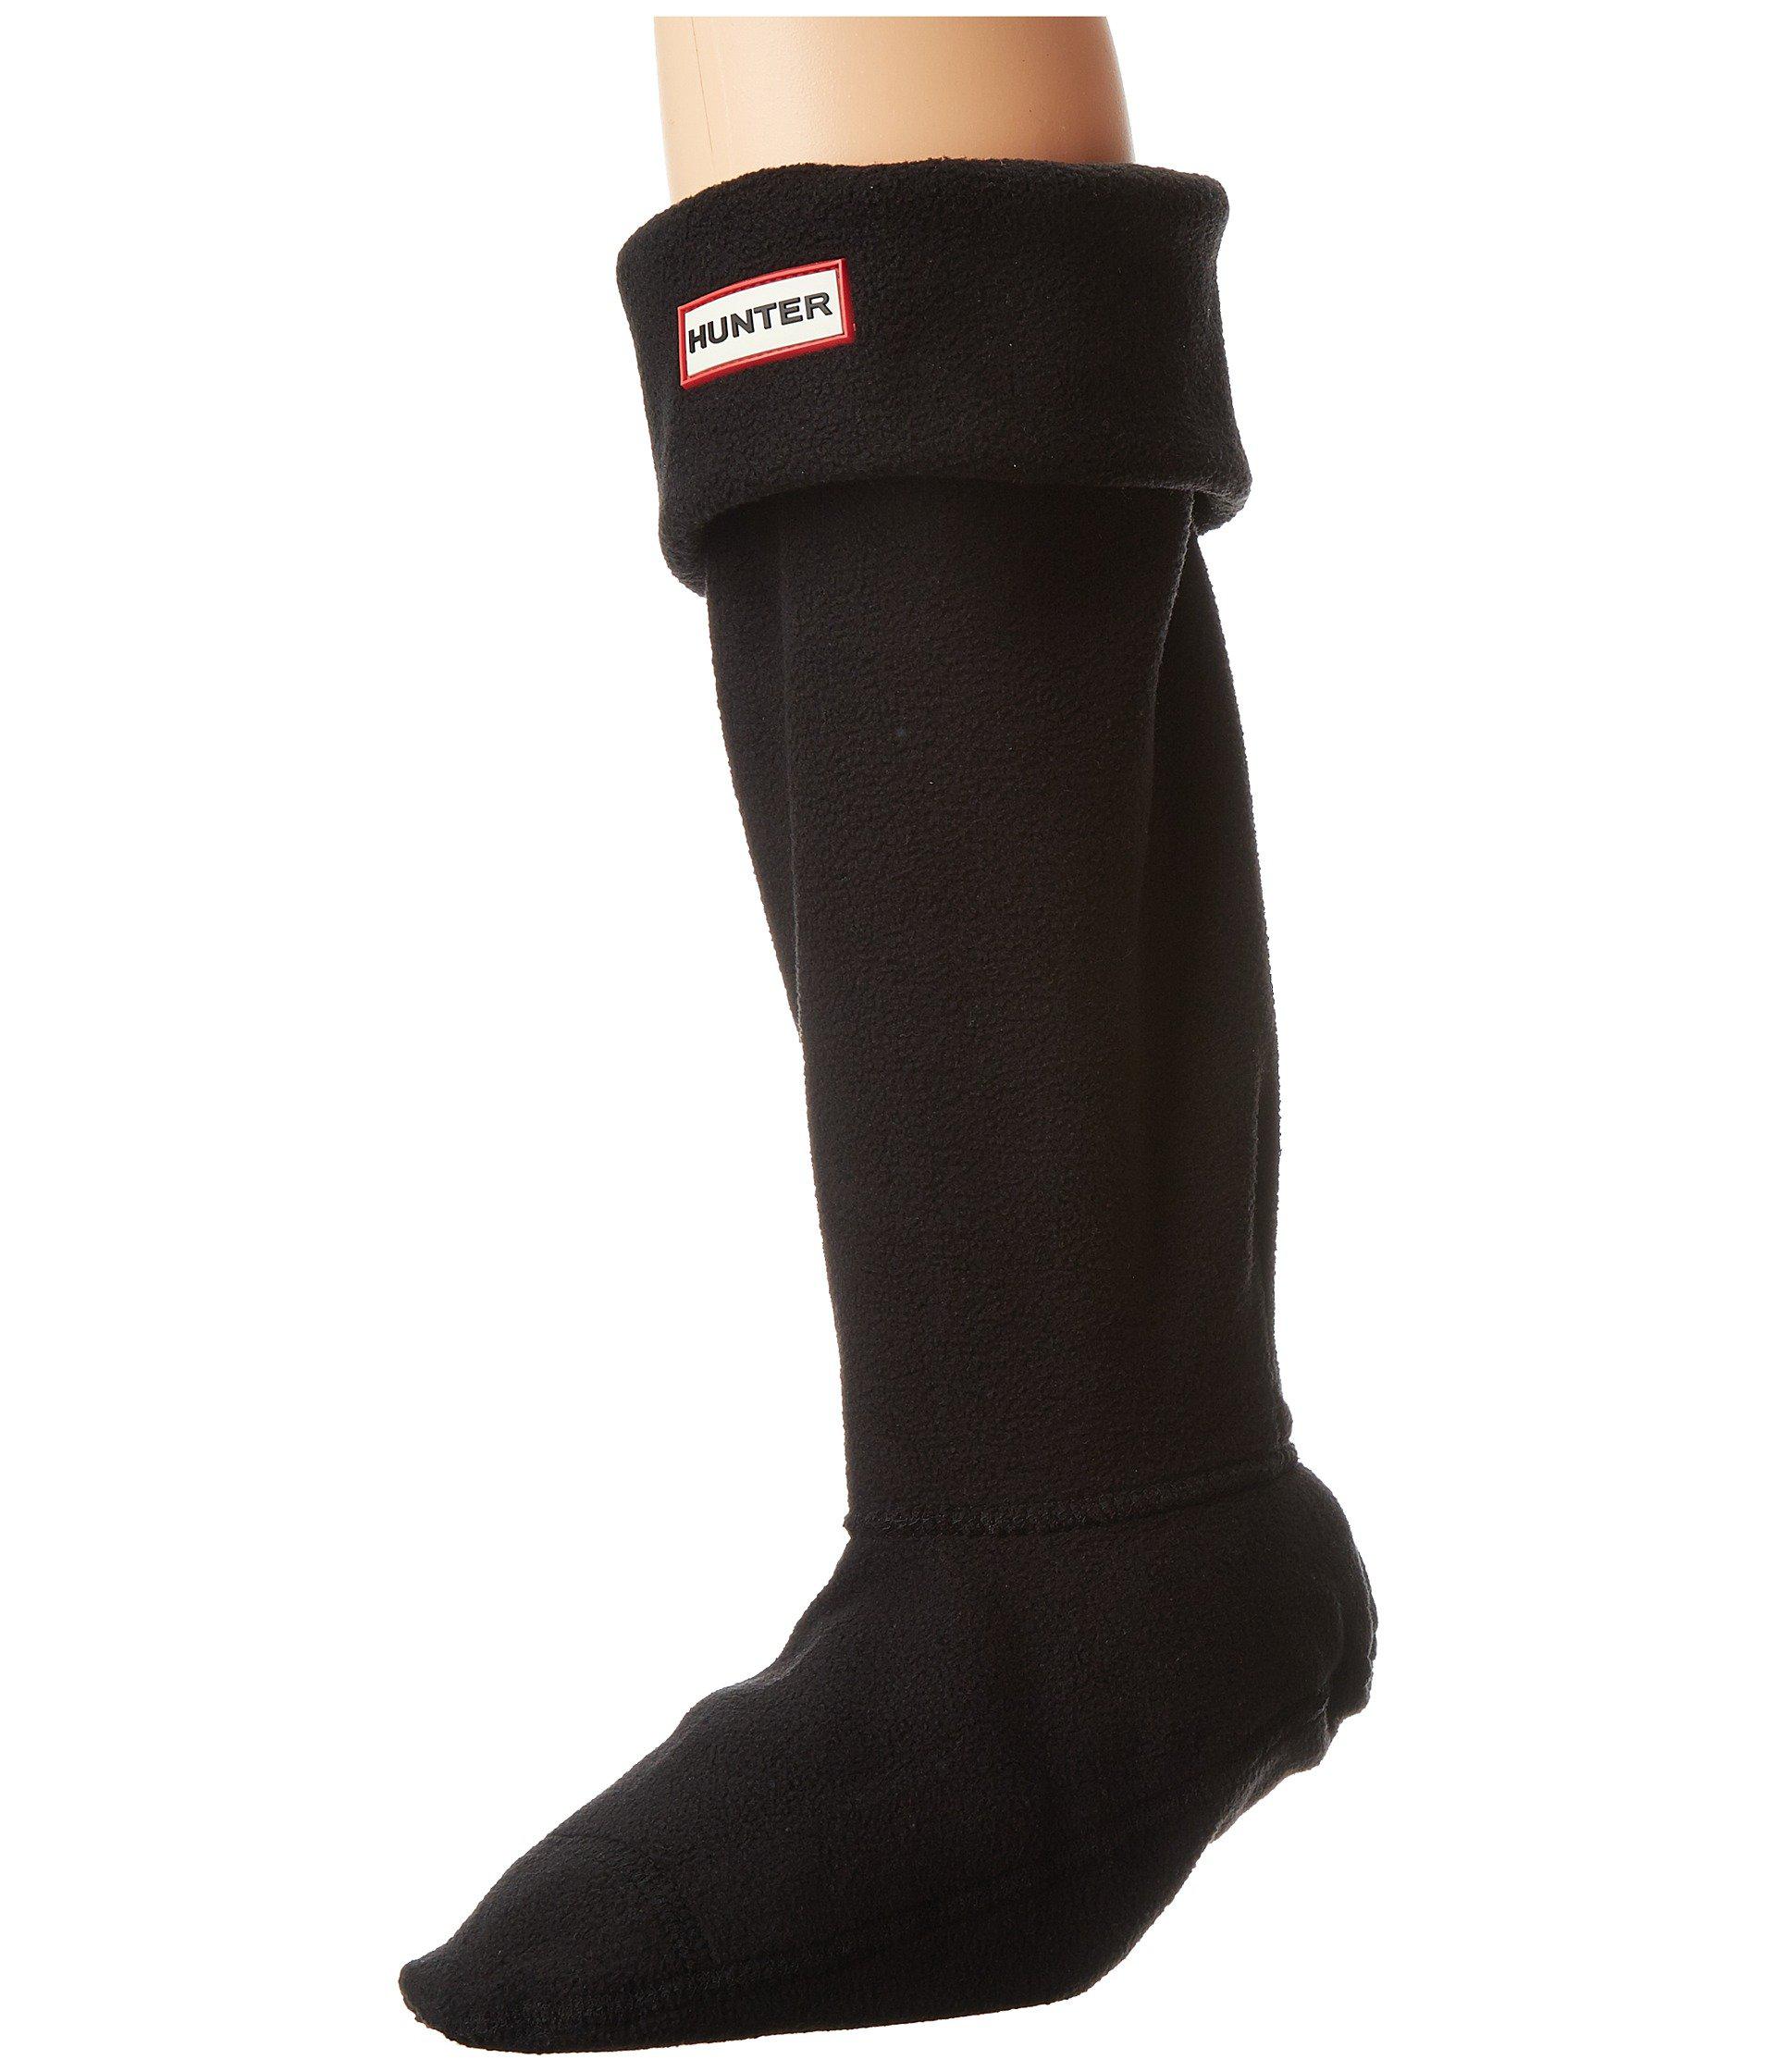 Lyst - HUNTER Boot Socks (black) Women's Crew Cut Socks Shoes in Black